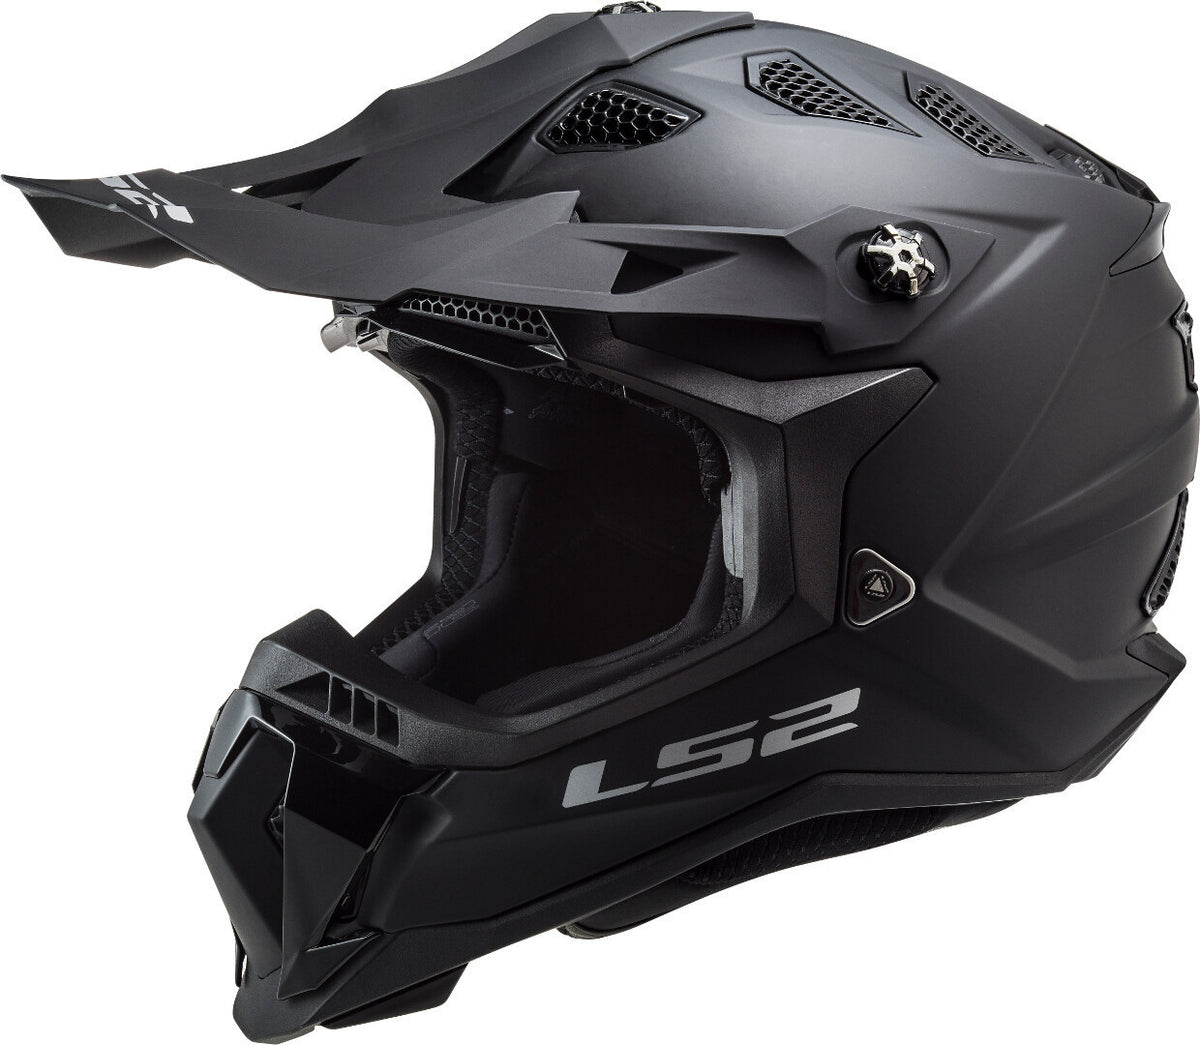 LS2 MX700  NOIR MATT BLK Helmet